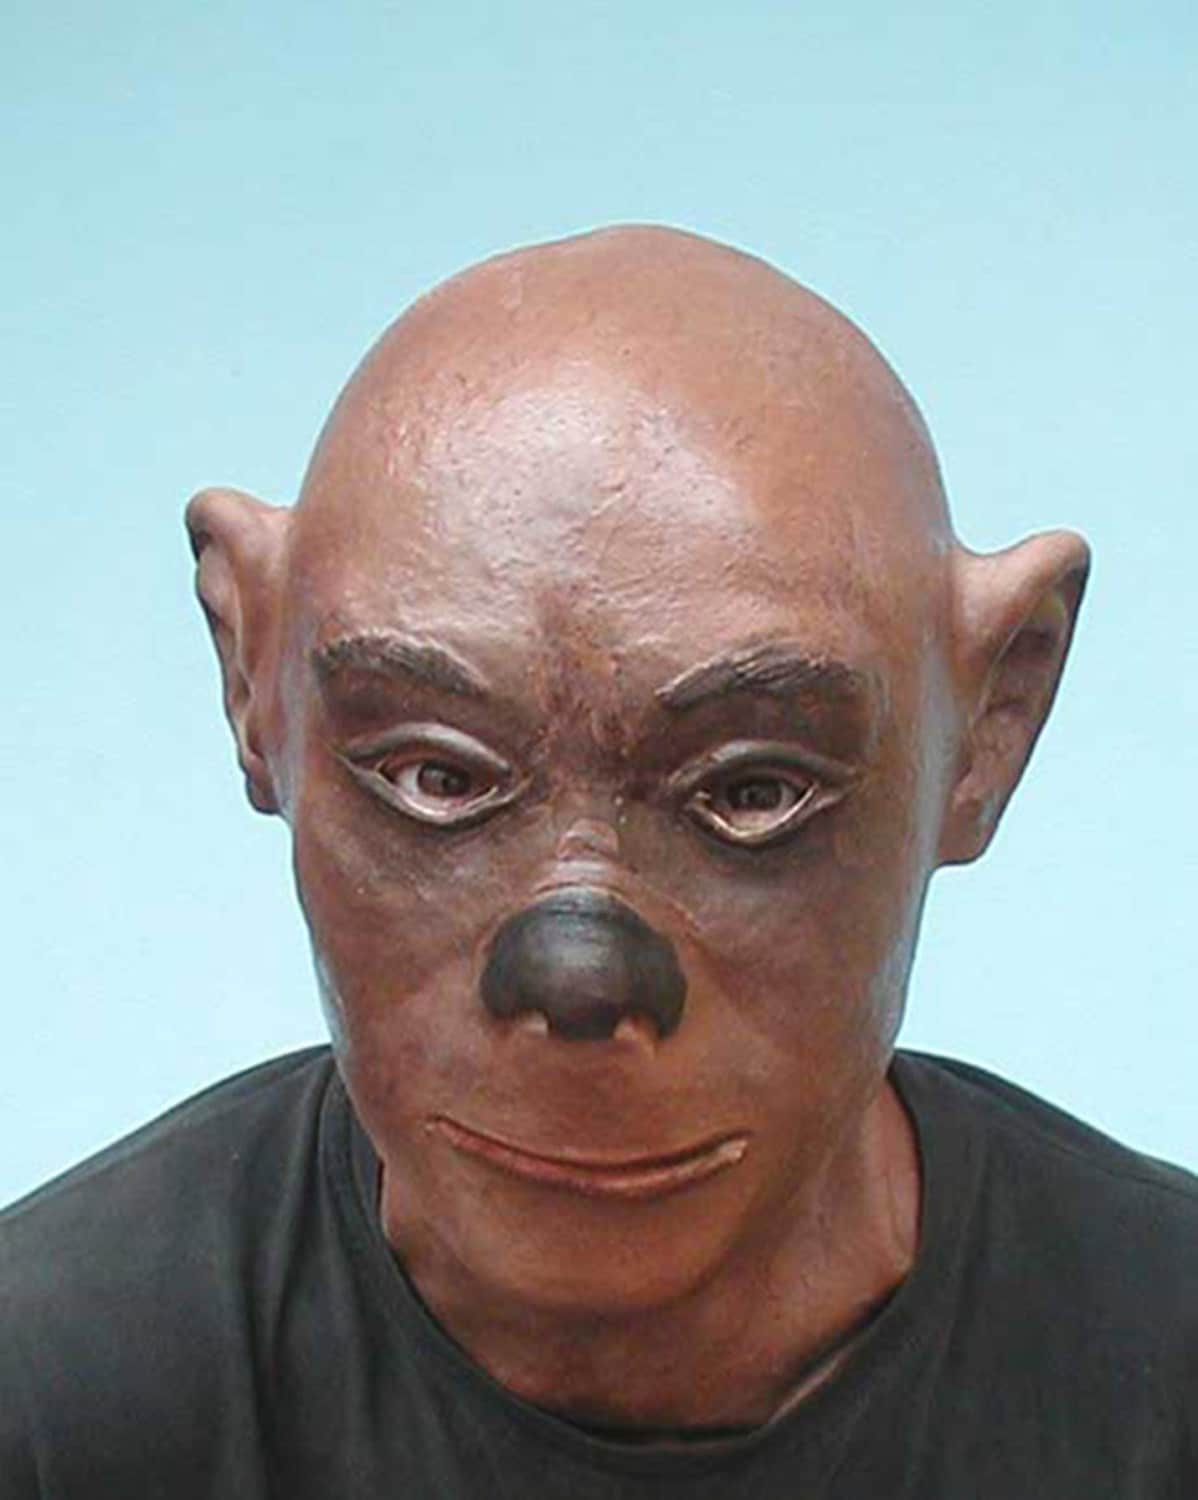 Mask Apeman Foam Latex Mask Cosplay Halloween Masks -